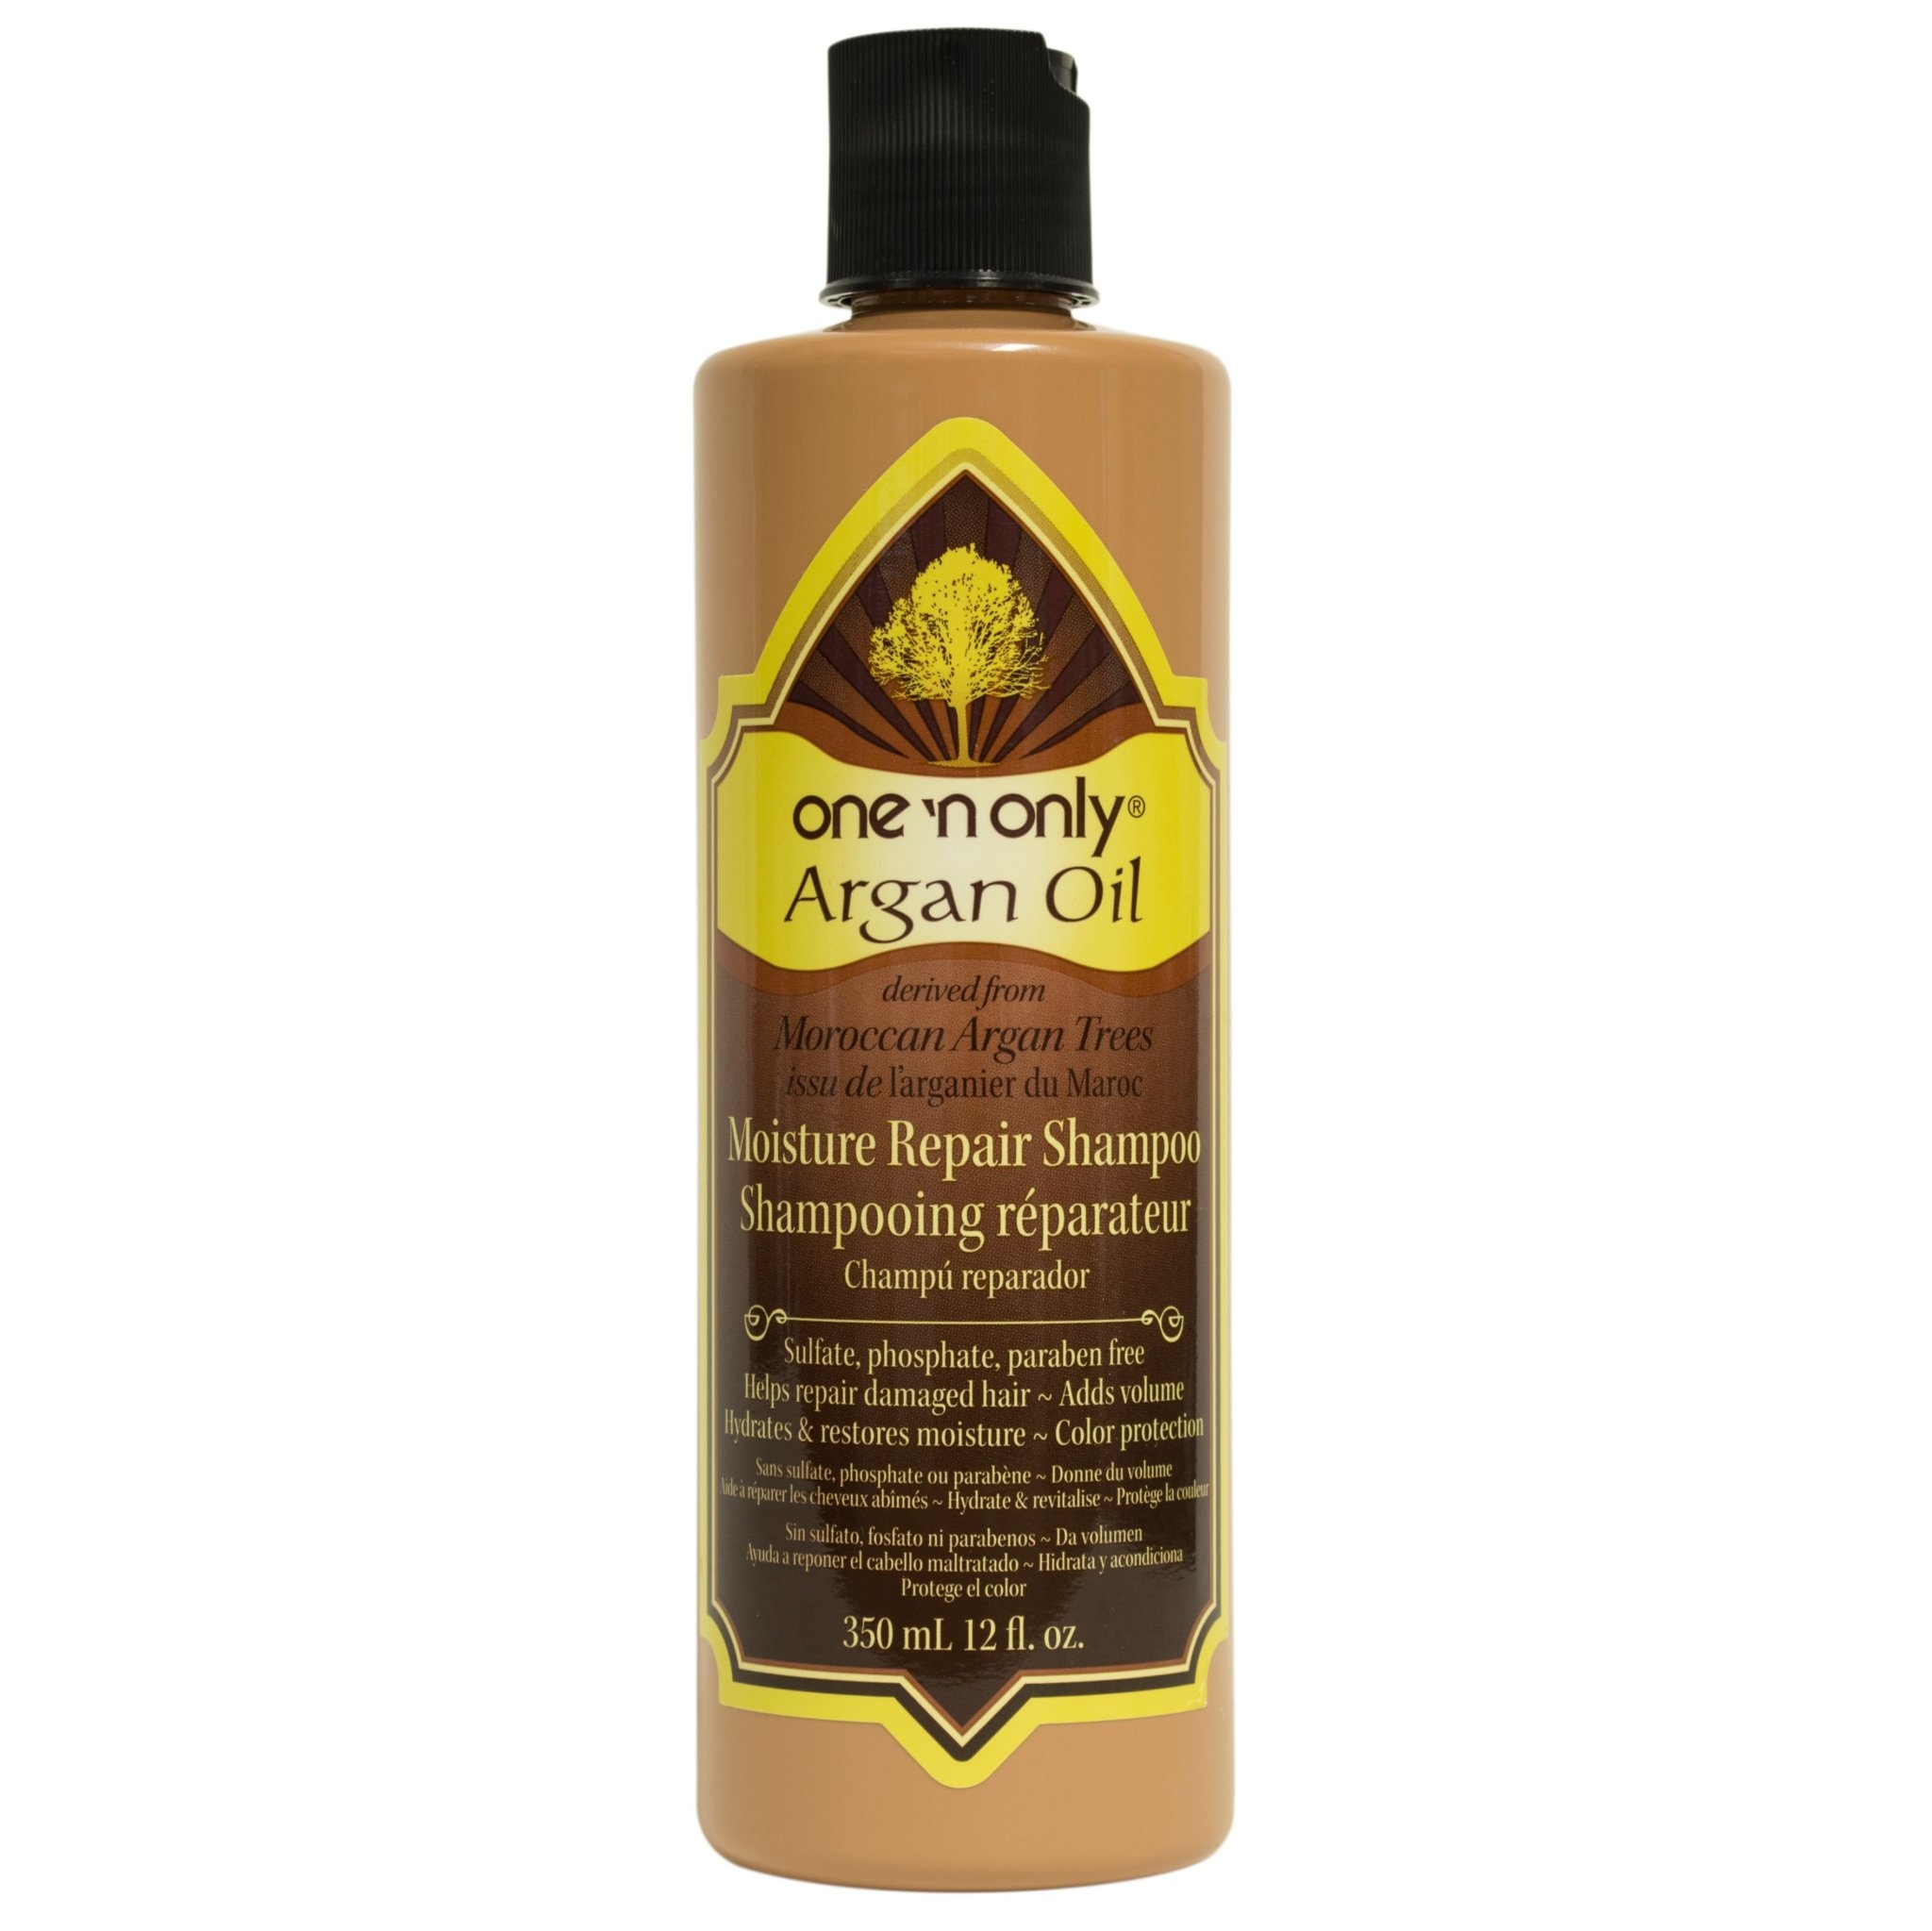 ONE N ONLY ARGAN OIL ONE'N ONLY - Argan Oil Moisture Repair Shampoo - 12 oz